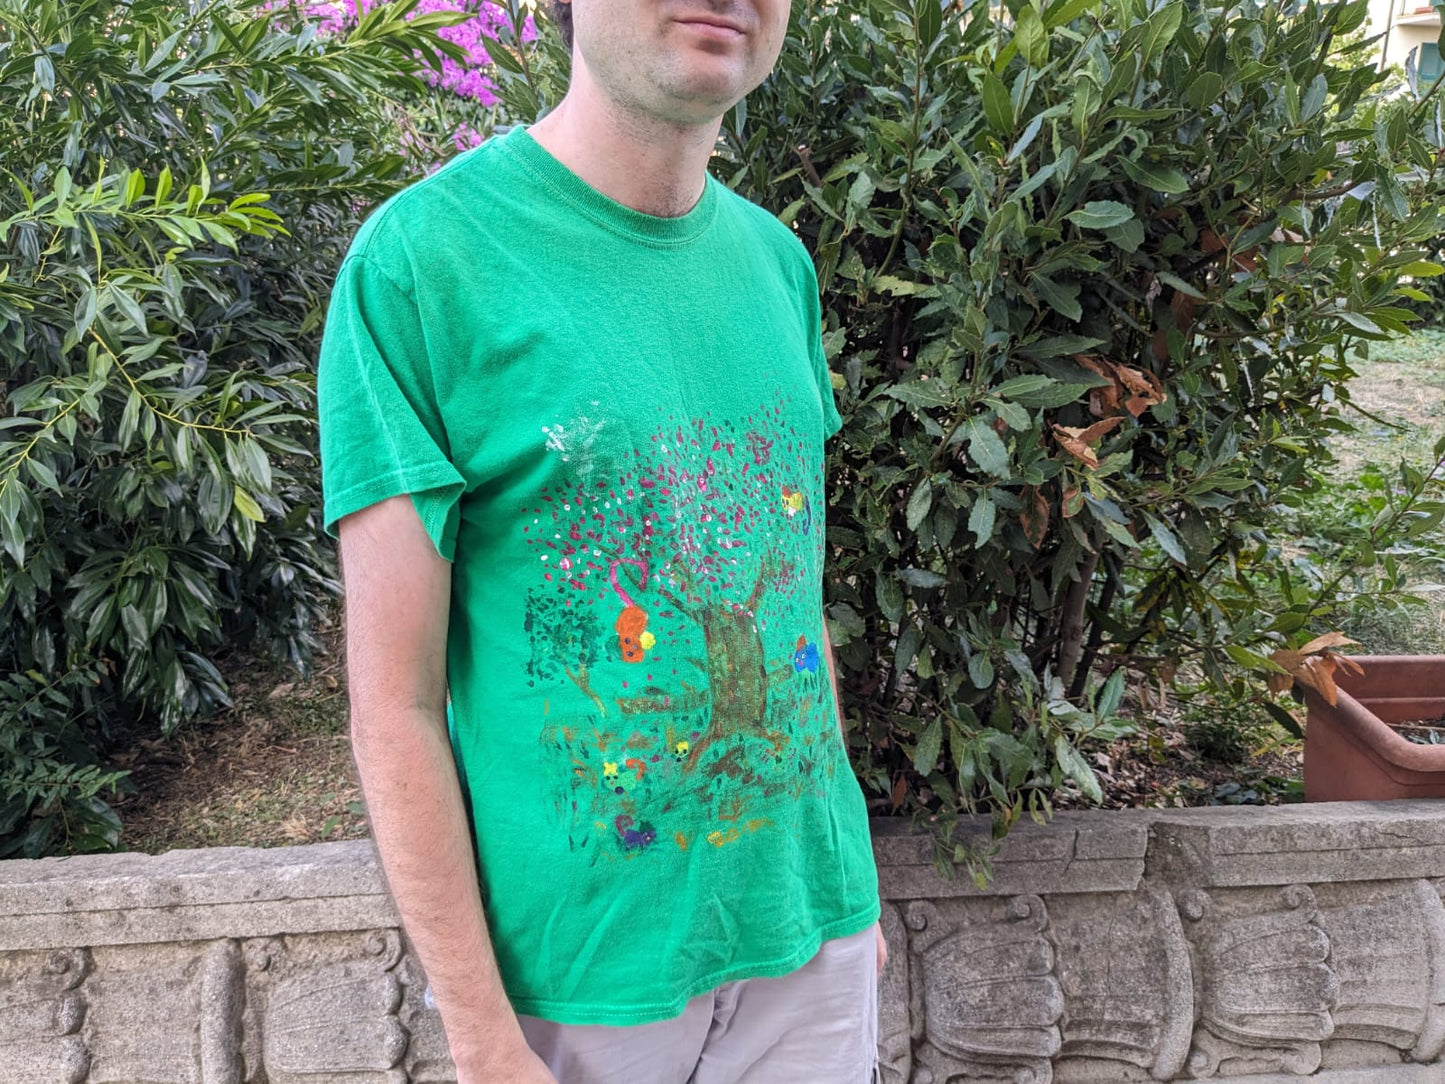 Gralockamay in a tree Green t-shirt